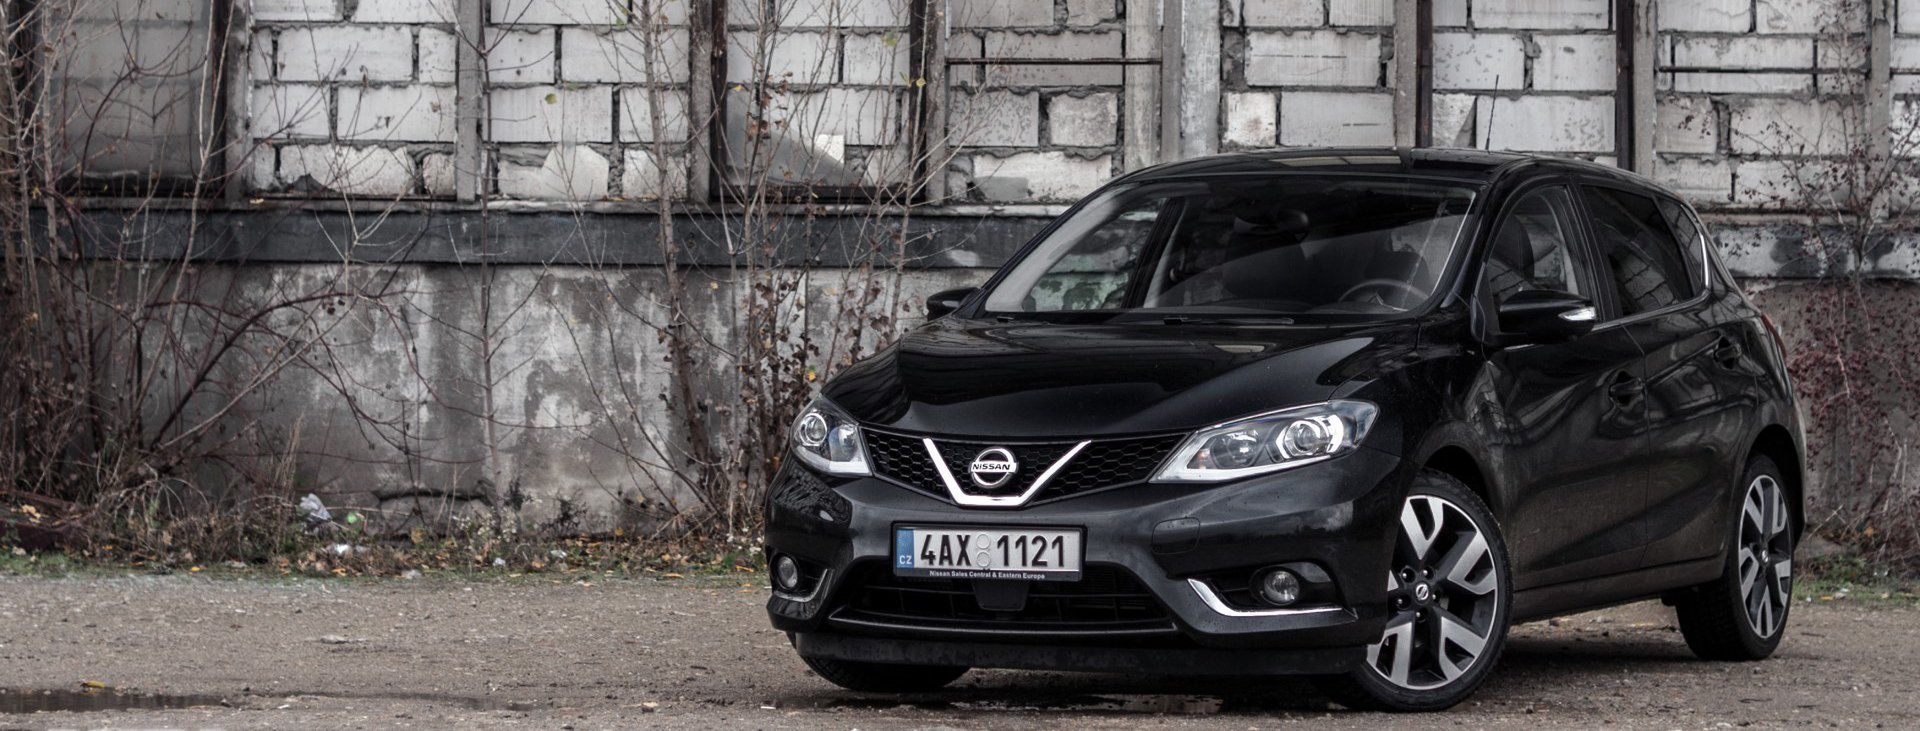 Nissan Pulsar (2015) 1.6 Dig-T - Test, Opinia, Spalanie, Cena | Autokult.pl